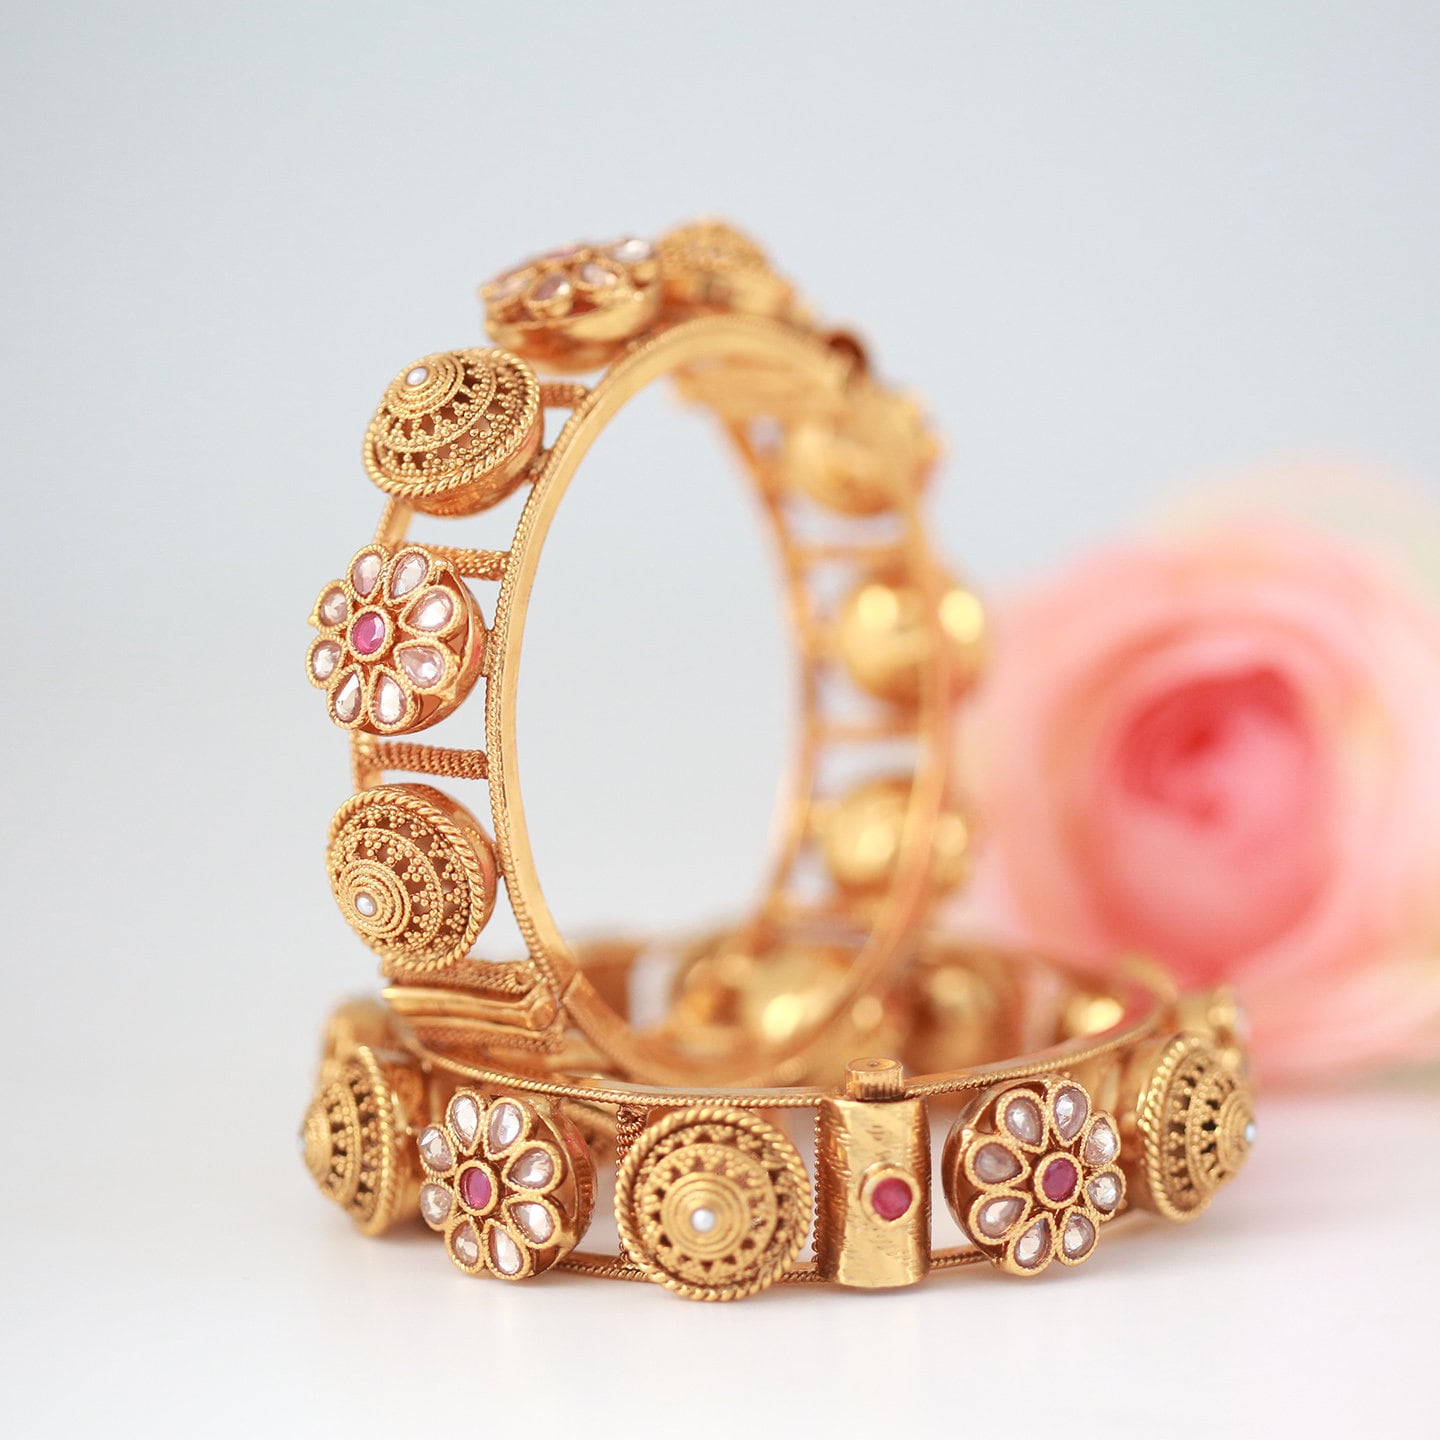 Gold plated Kundan kada bangles for ladies |Openable Polki kada bangle | Pair of Indian Wedding bangles studded with Ruby white round stones